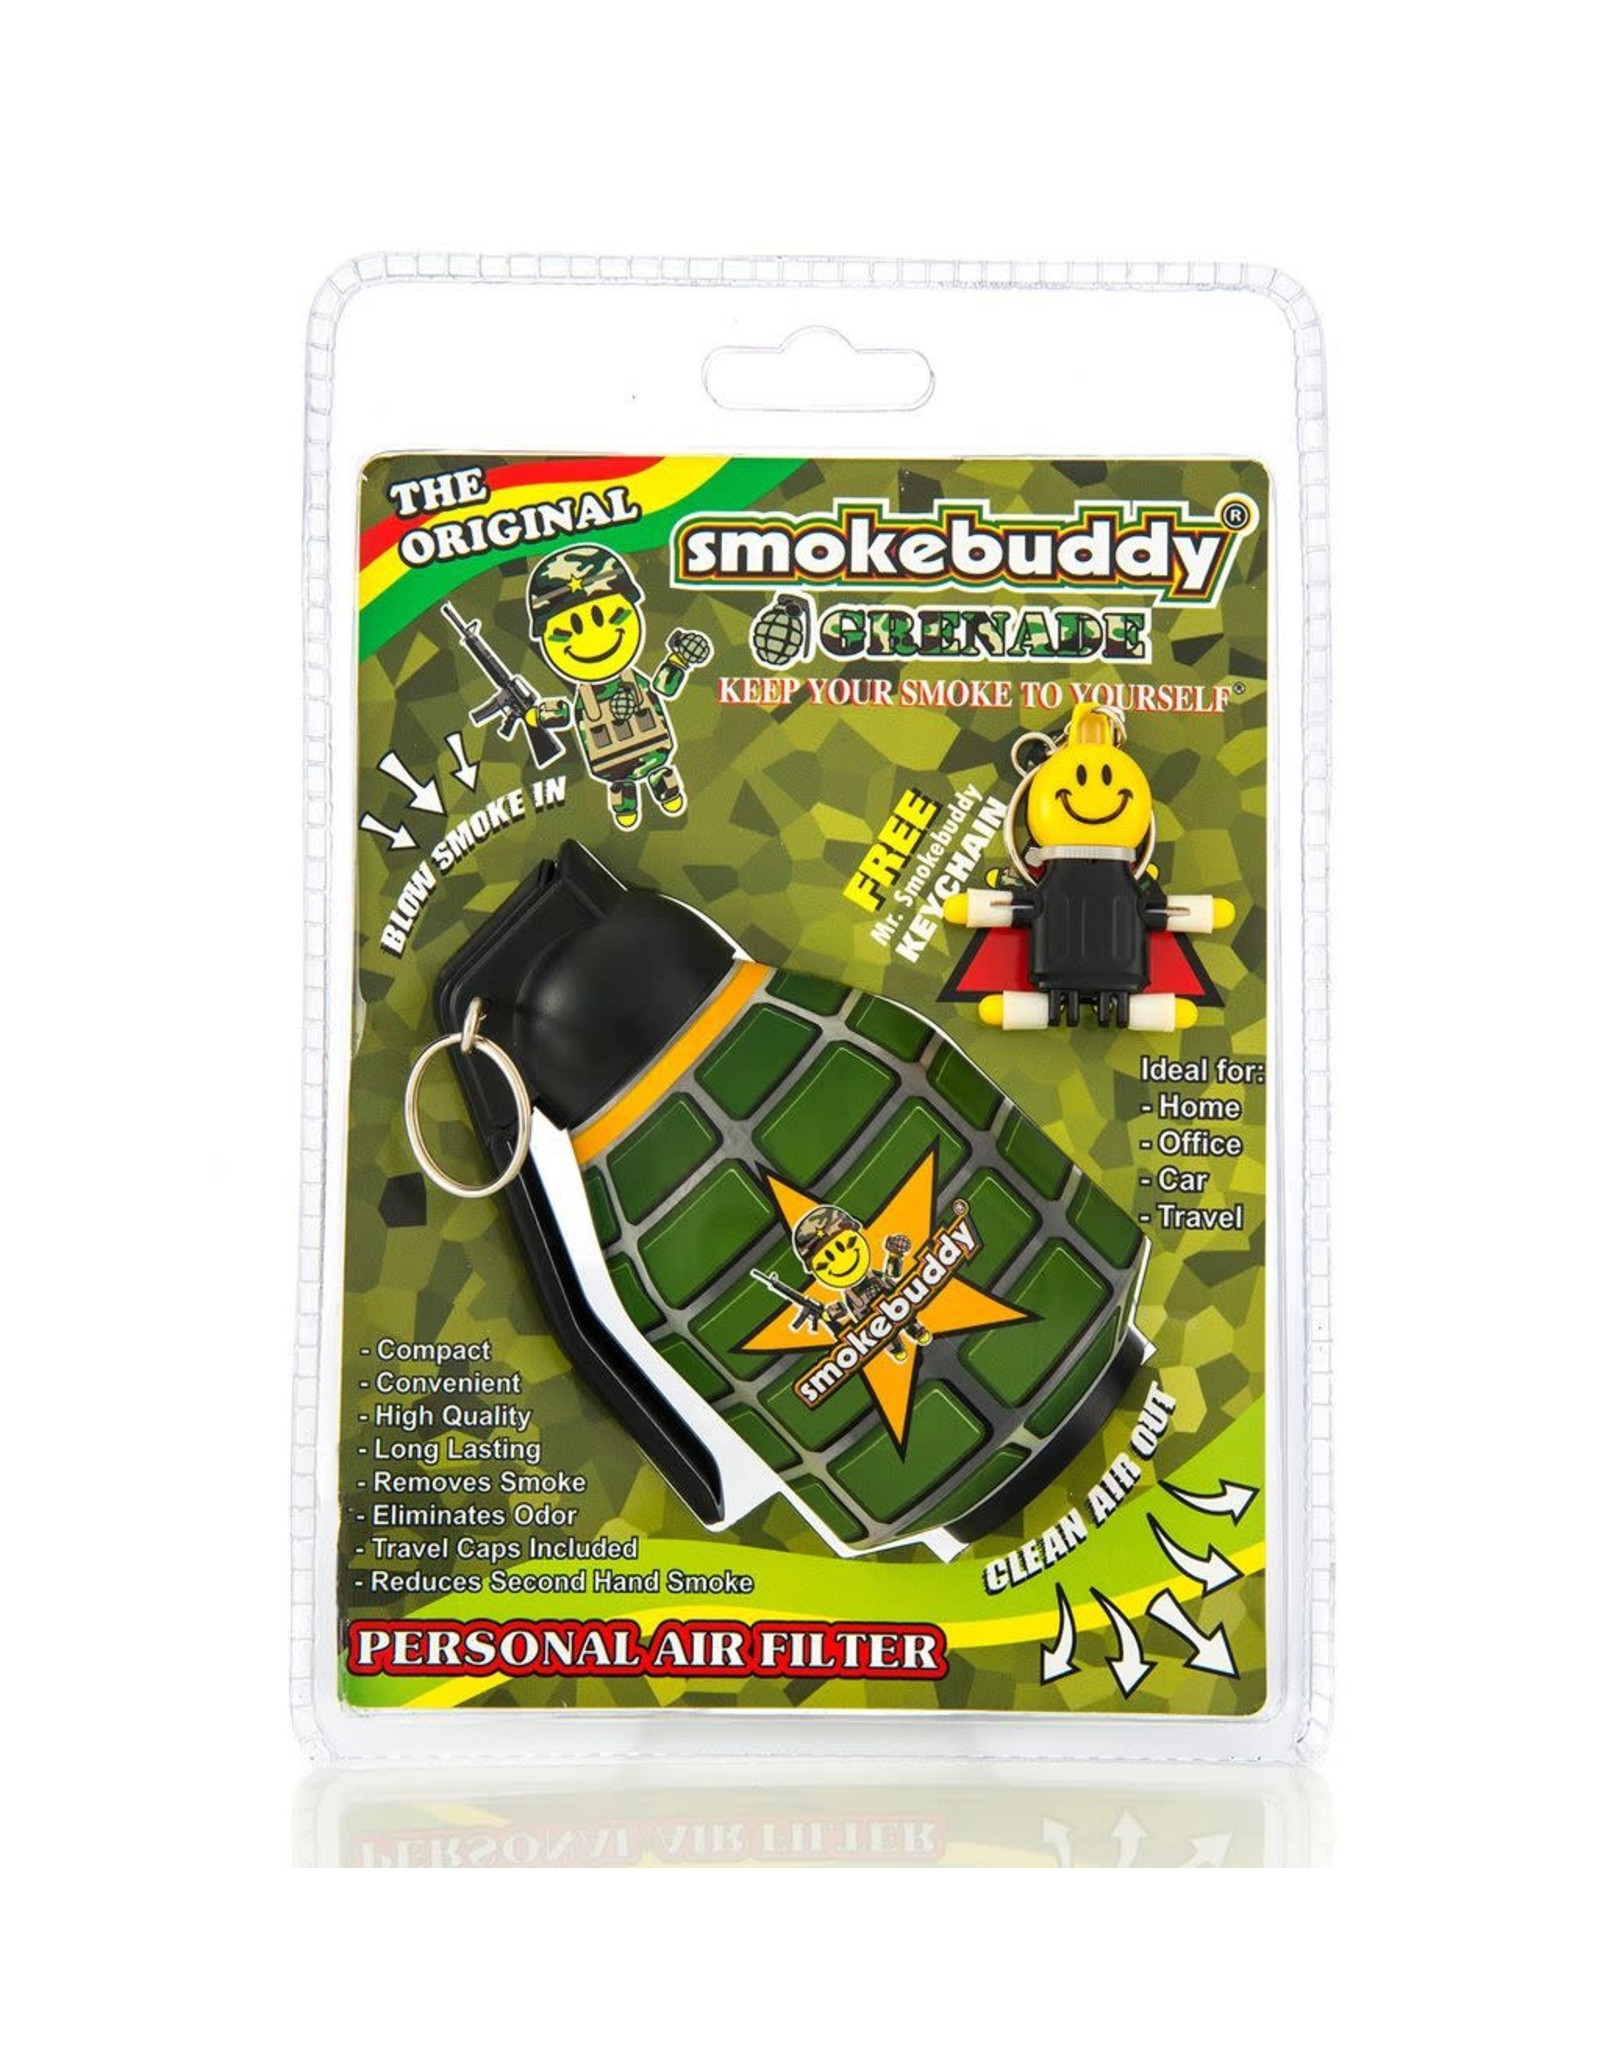 smoke buddy Grenade Smokebuddy Original Personal Air Filter